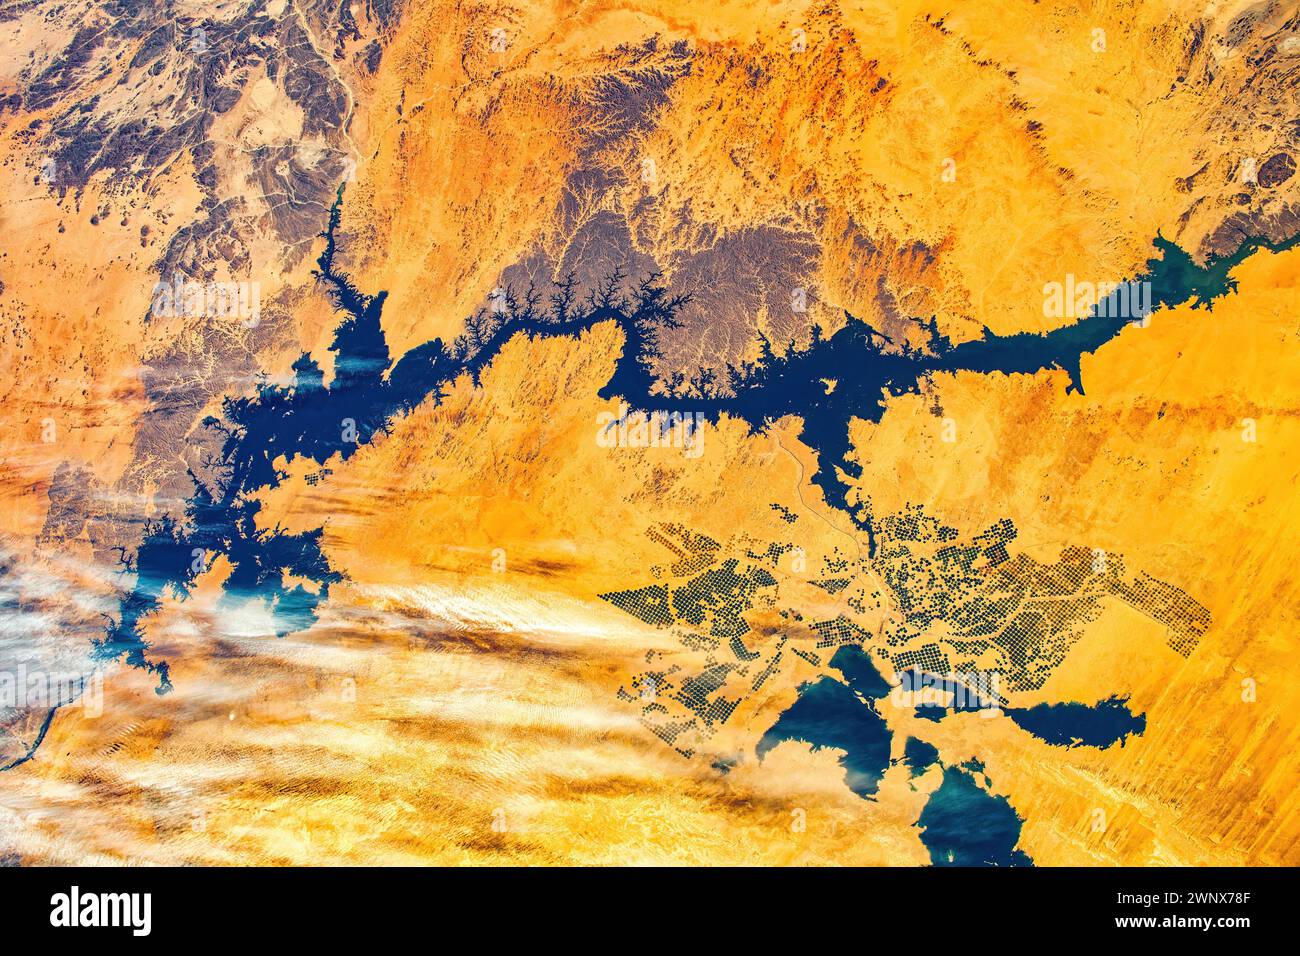 Lakes Nubia and Tashka, Egypt. Digital enhancement of an image by NASA Stock Photo